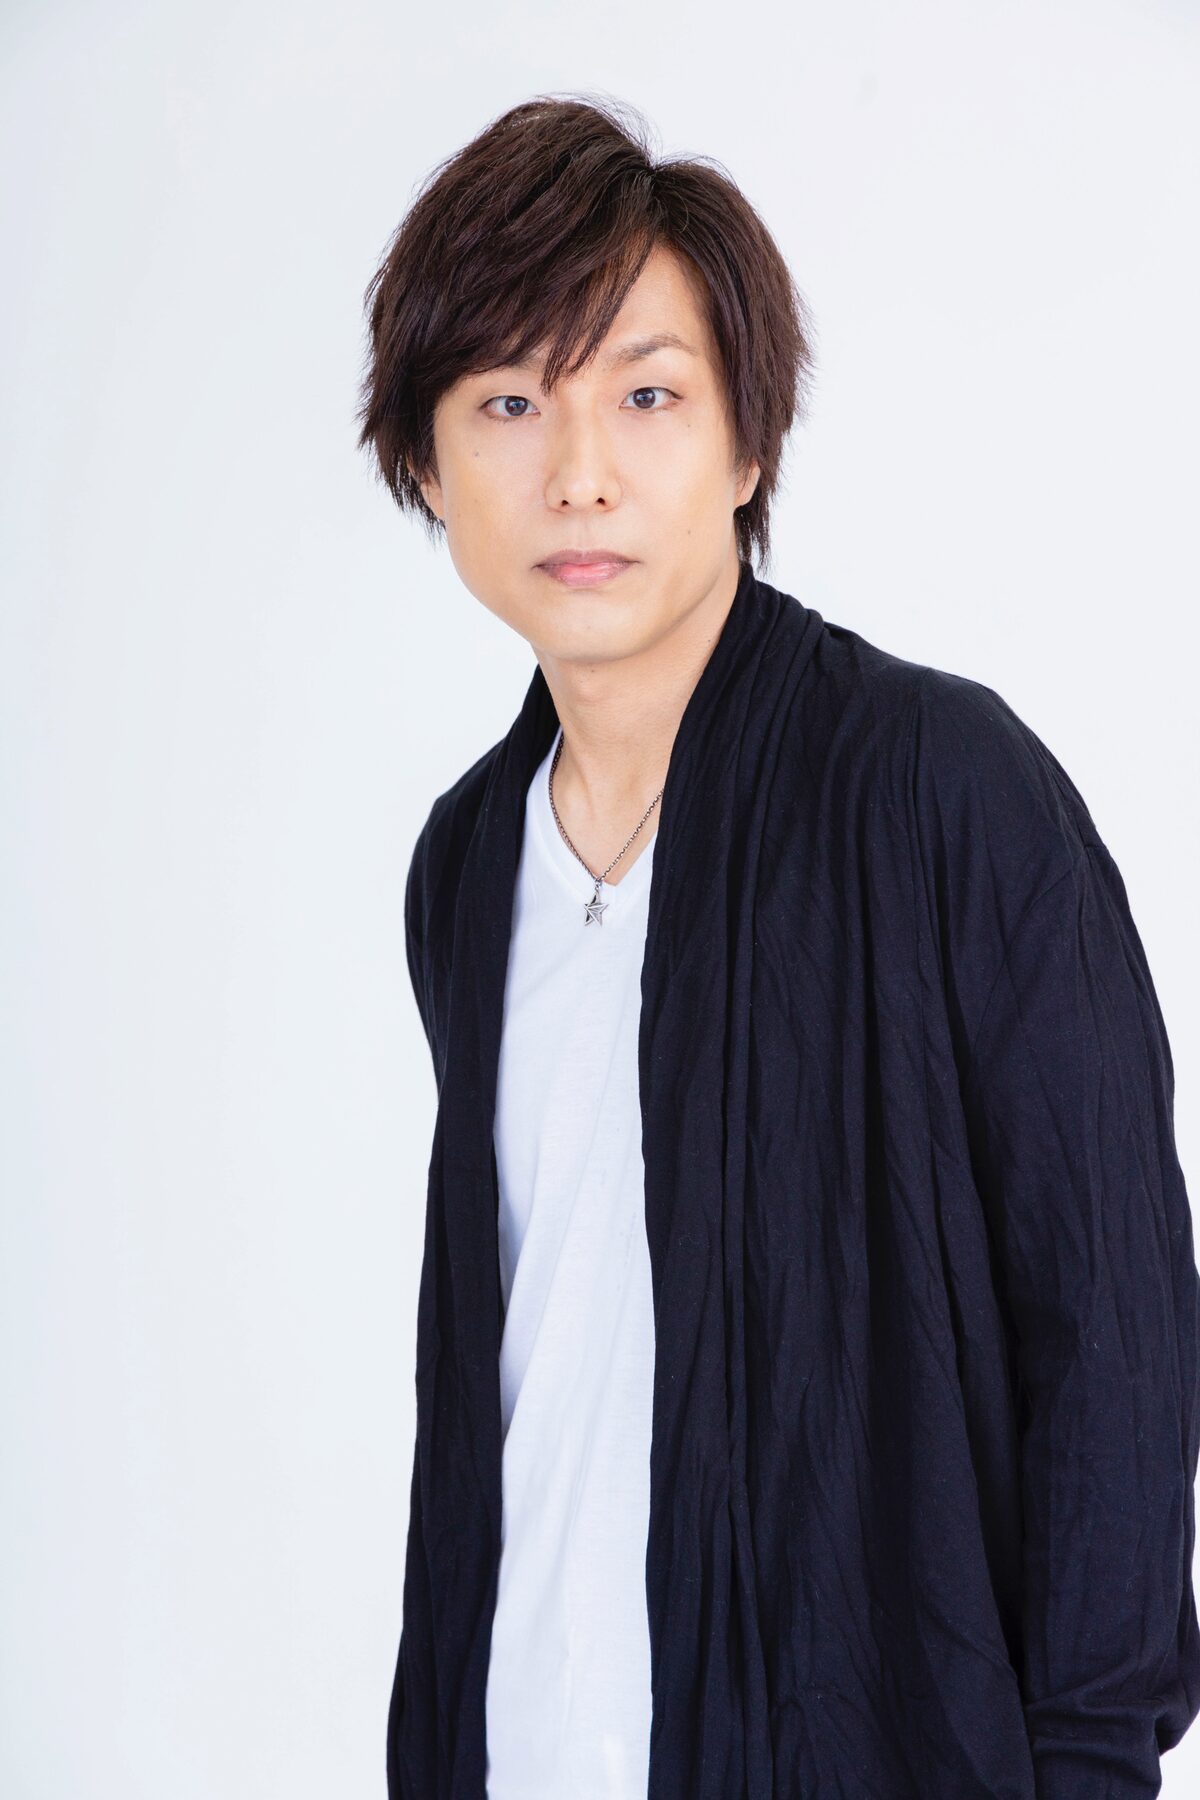 Picture of Junichi Yanagita